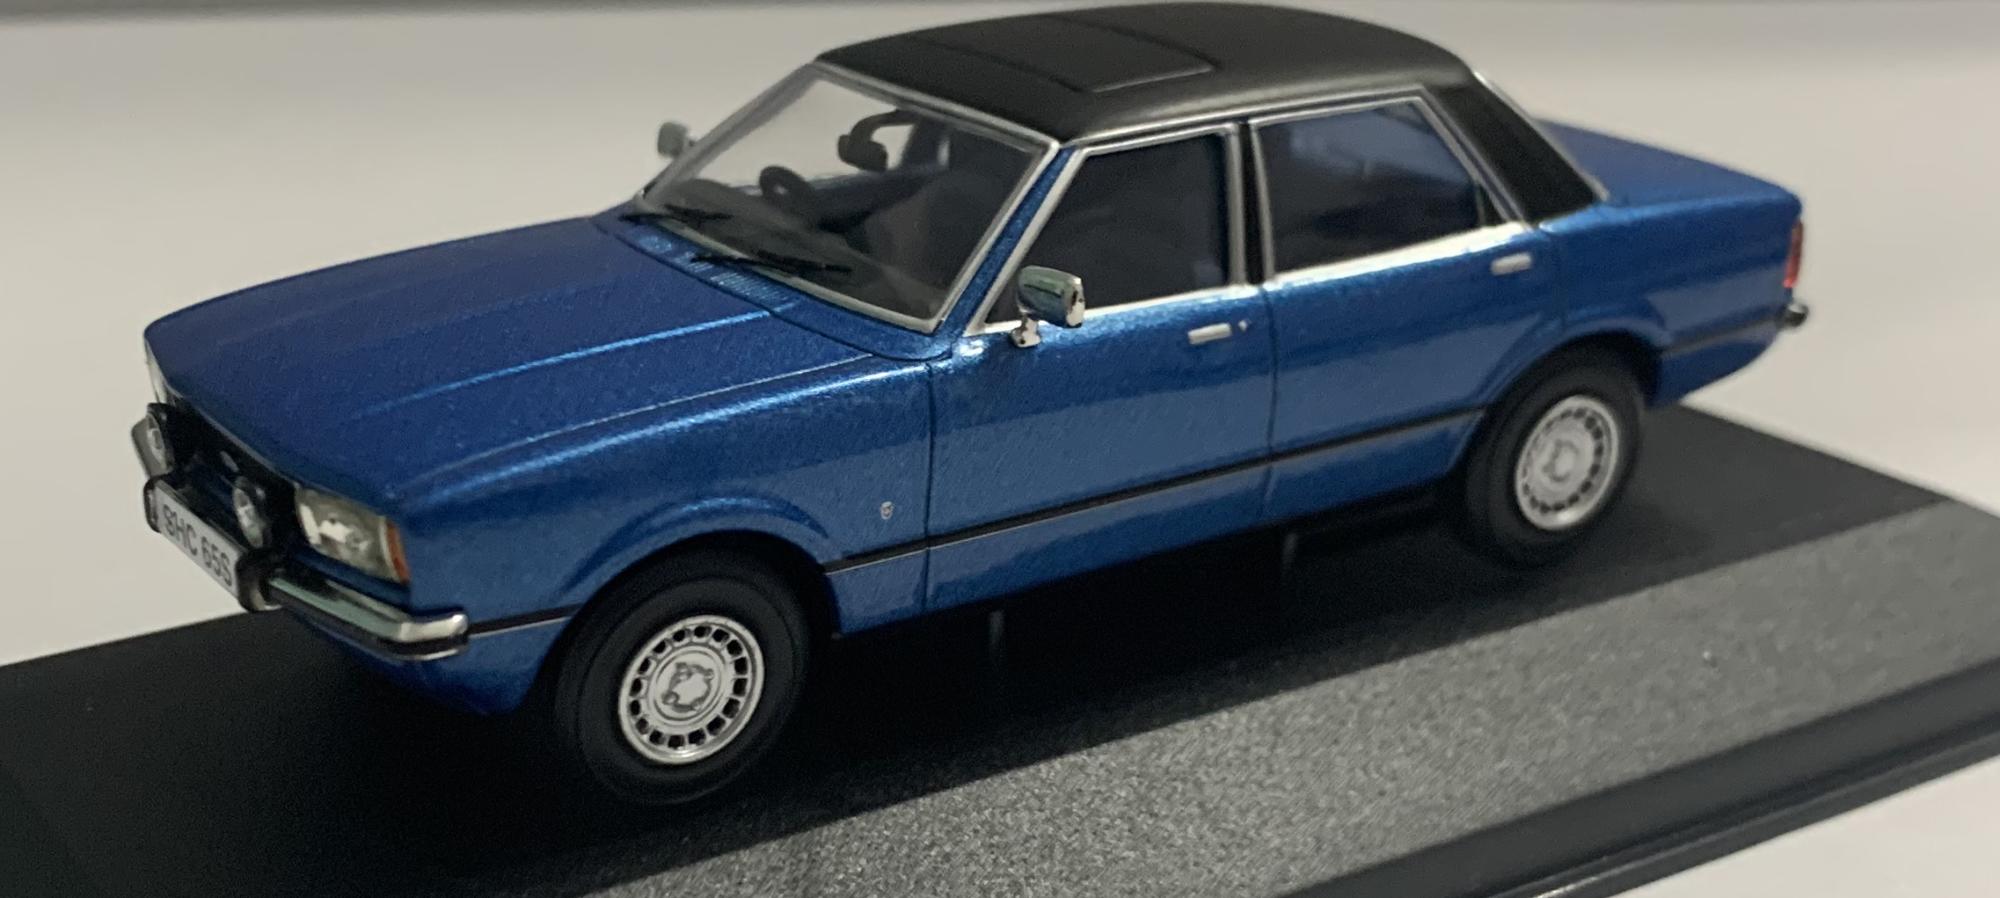 Ford Cortina mk4 2.0 Ghia in Hawaiian blue 1:43 scale car model from Corgi Vanguards, Limited edition